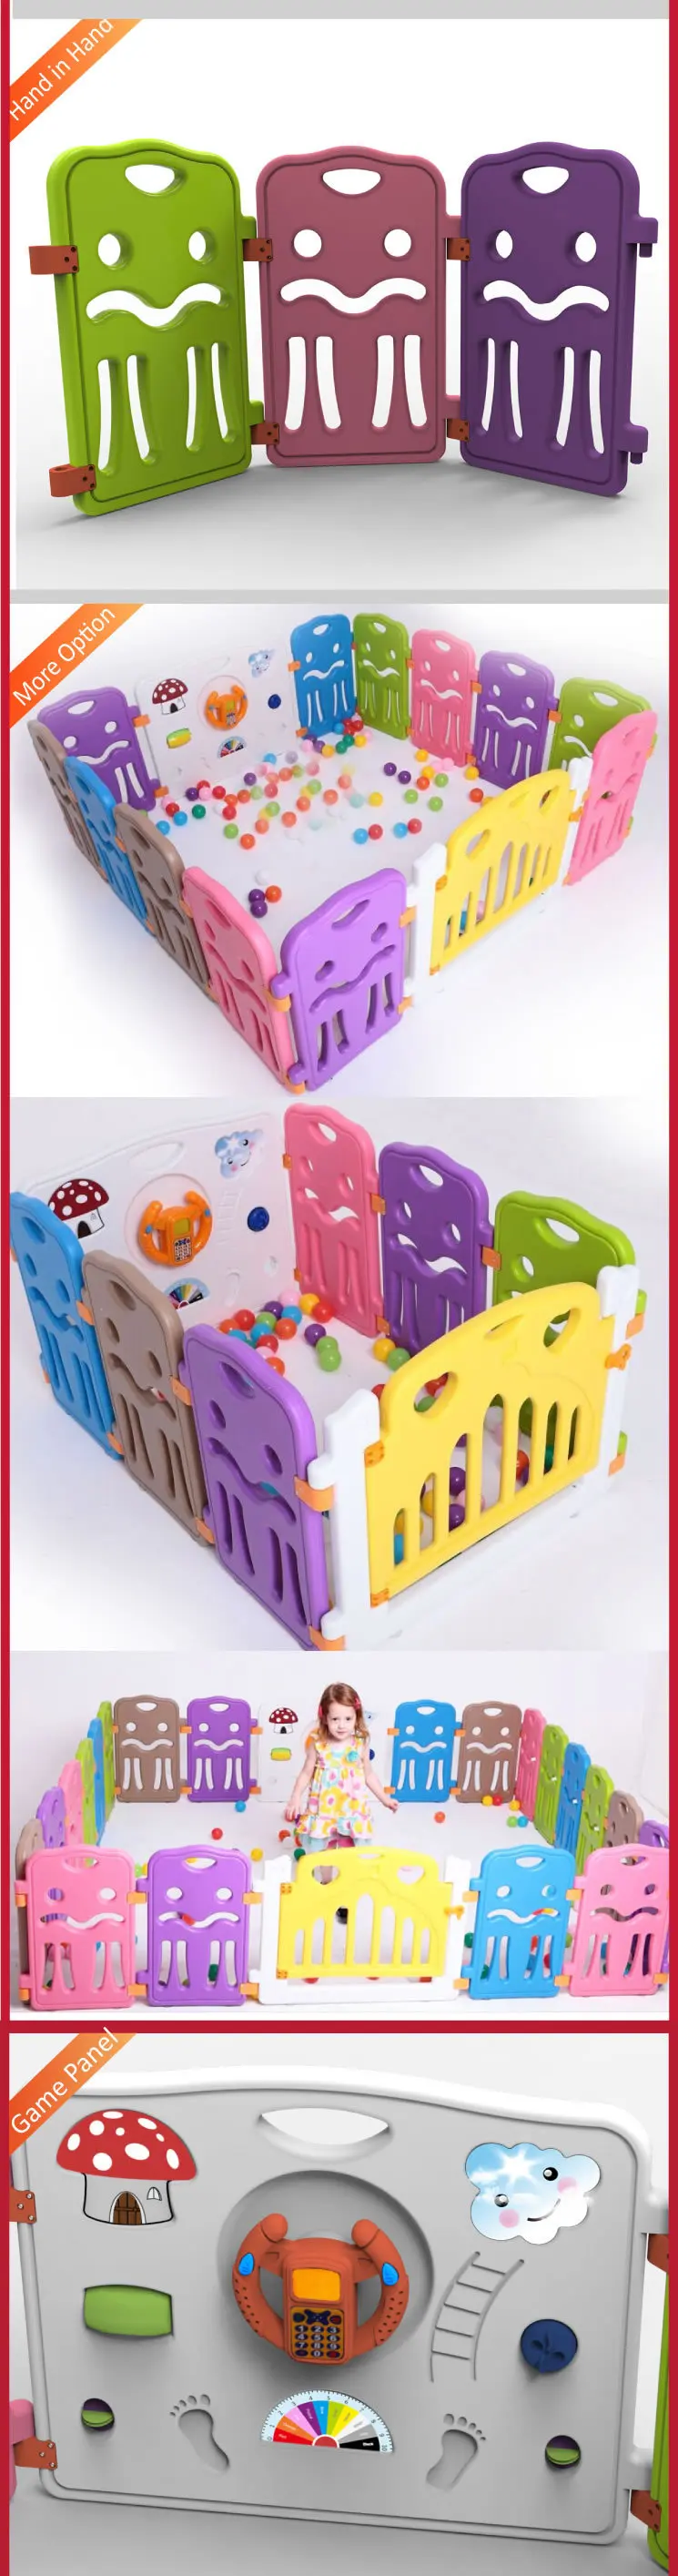 2020 New Design Saftey Game Playpen Kids Plastic Playpen Fence luxury baby playpen